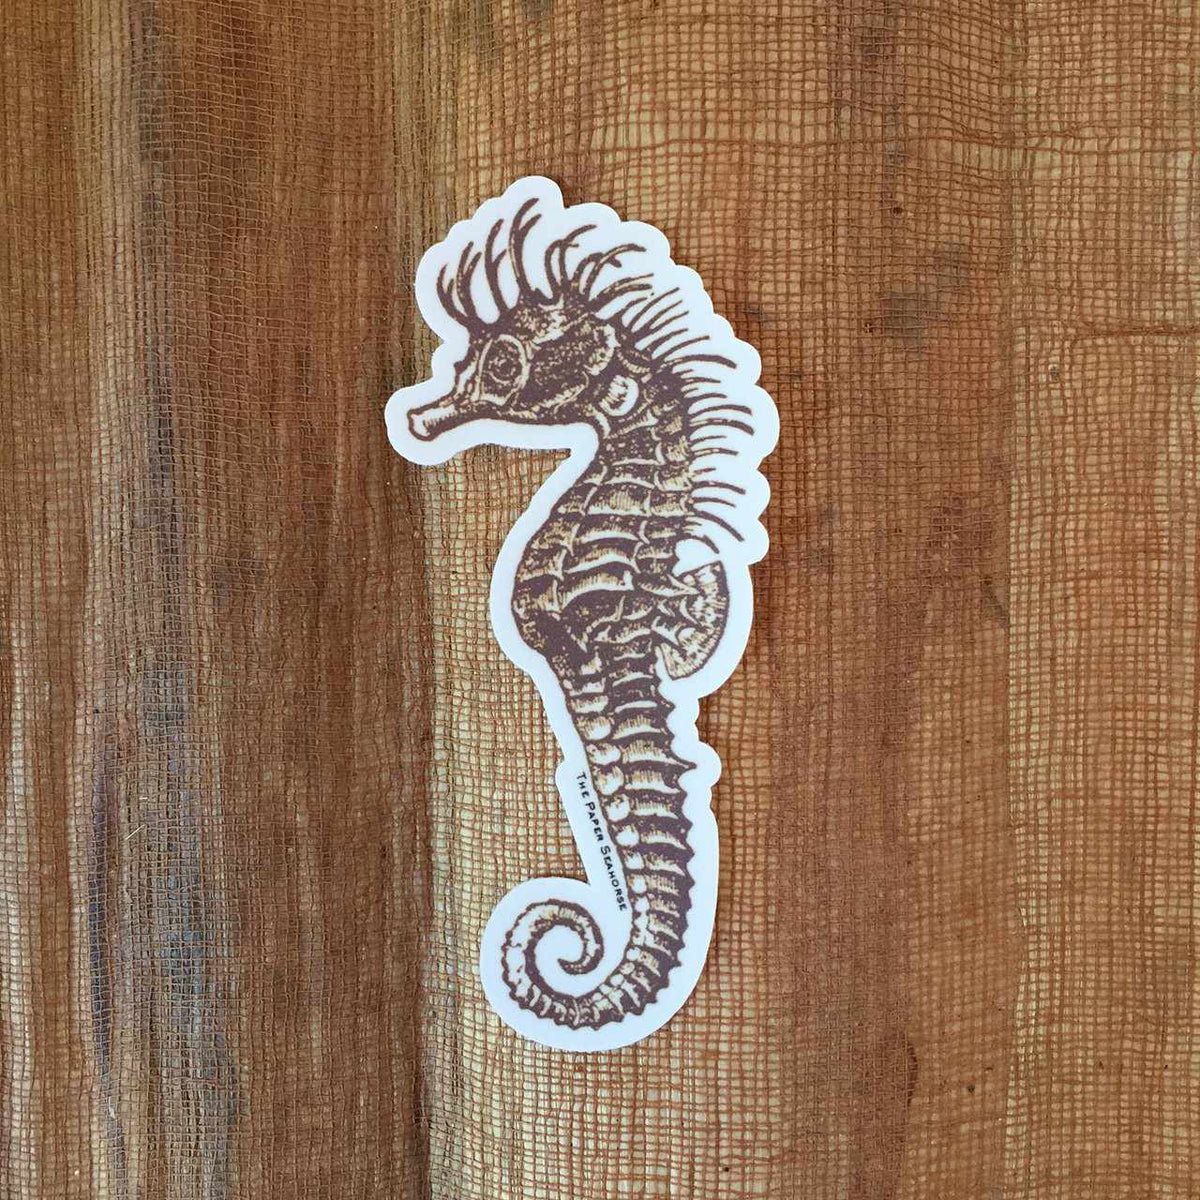 The Paper Seahorse Accessories Vintage Paper Seahorse Sticker